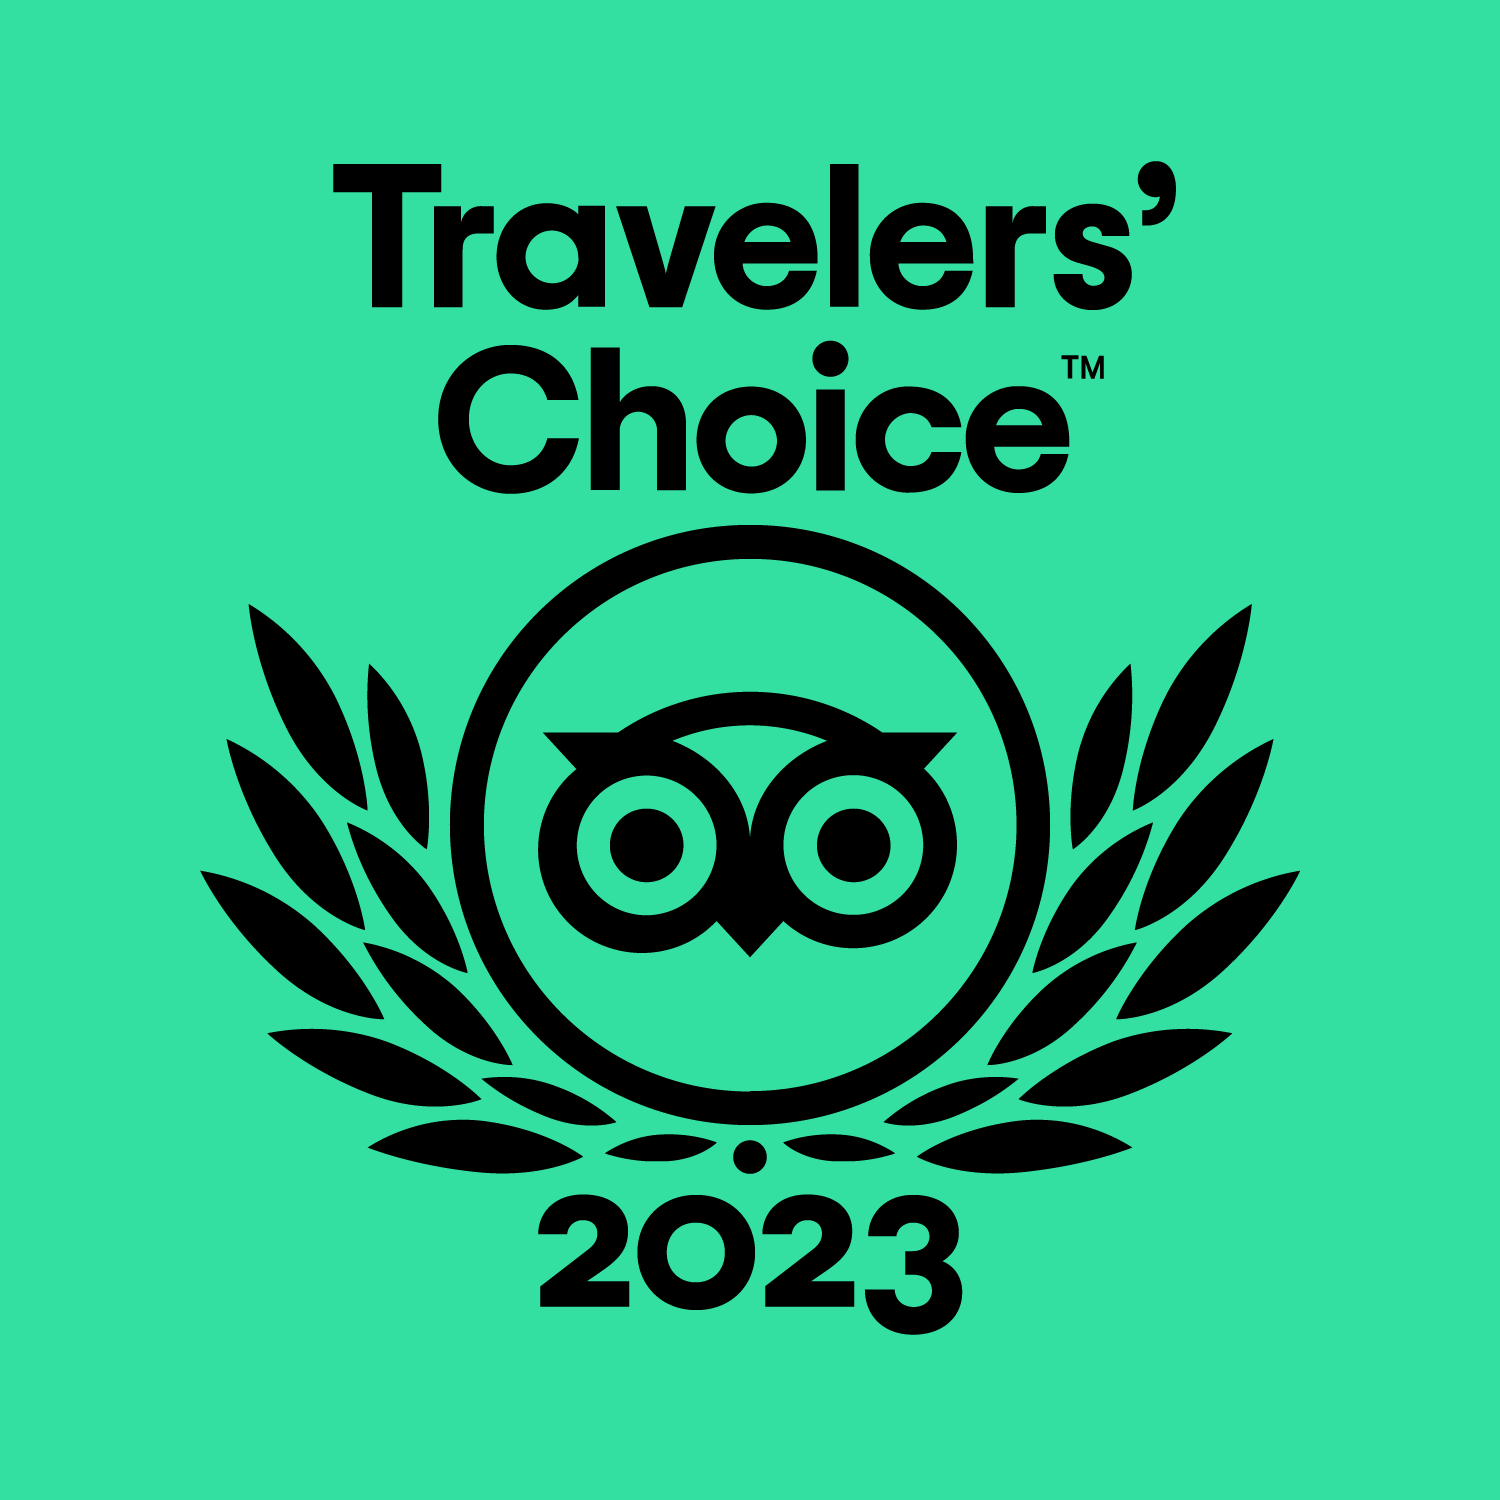 Traveler's choice award 2023